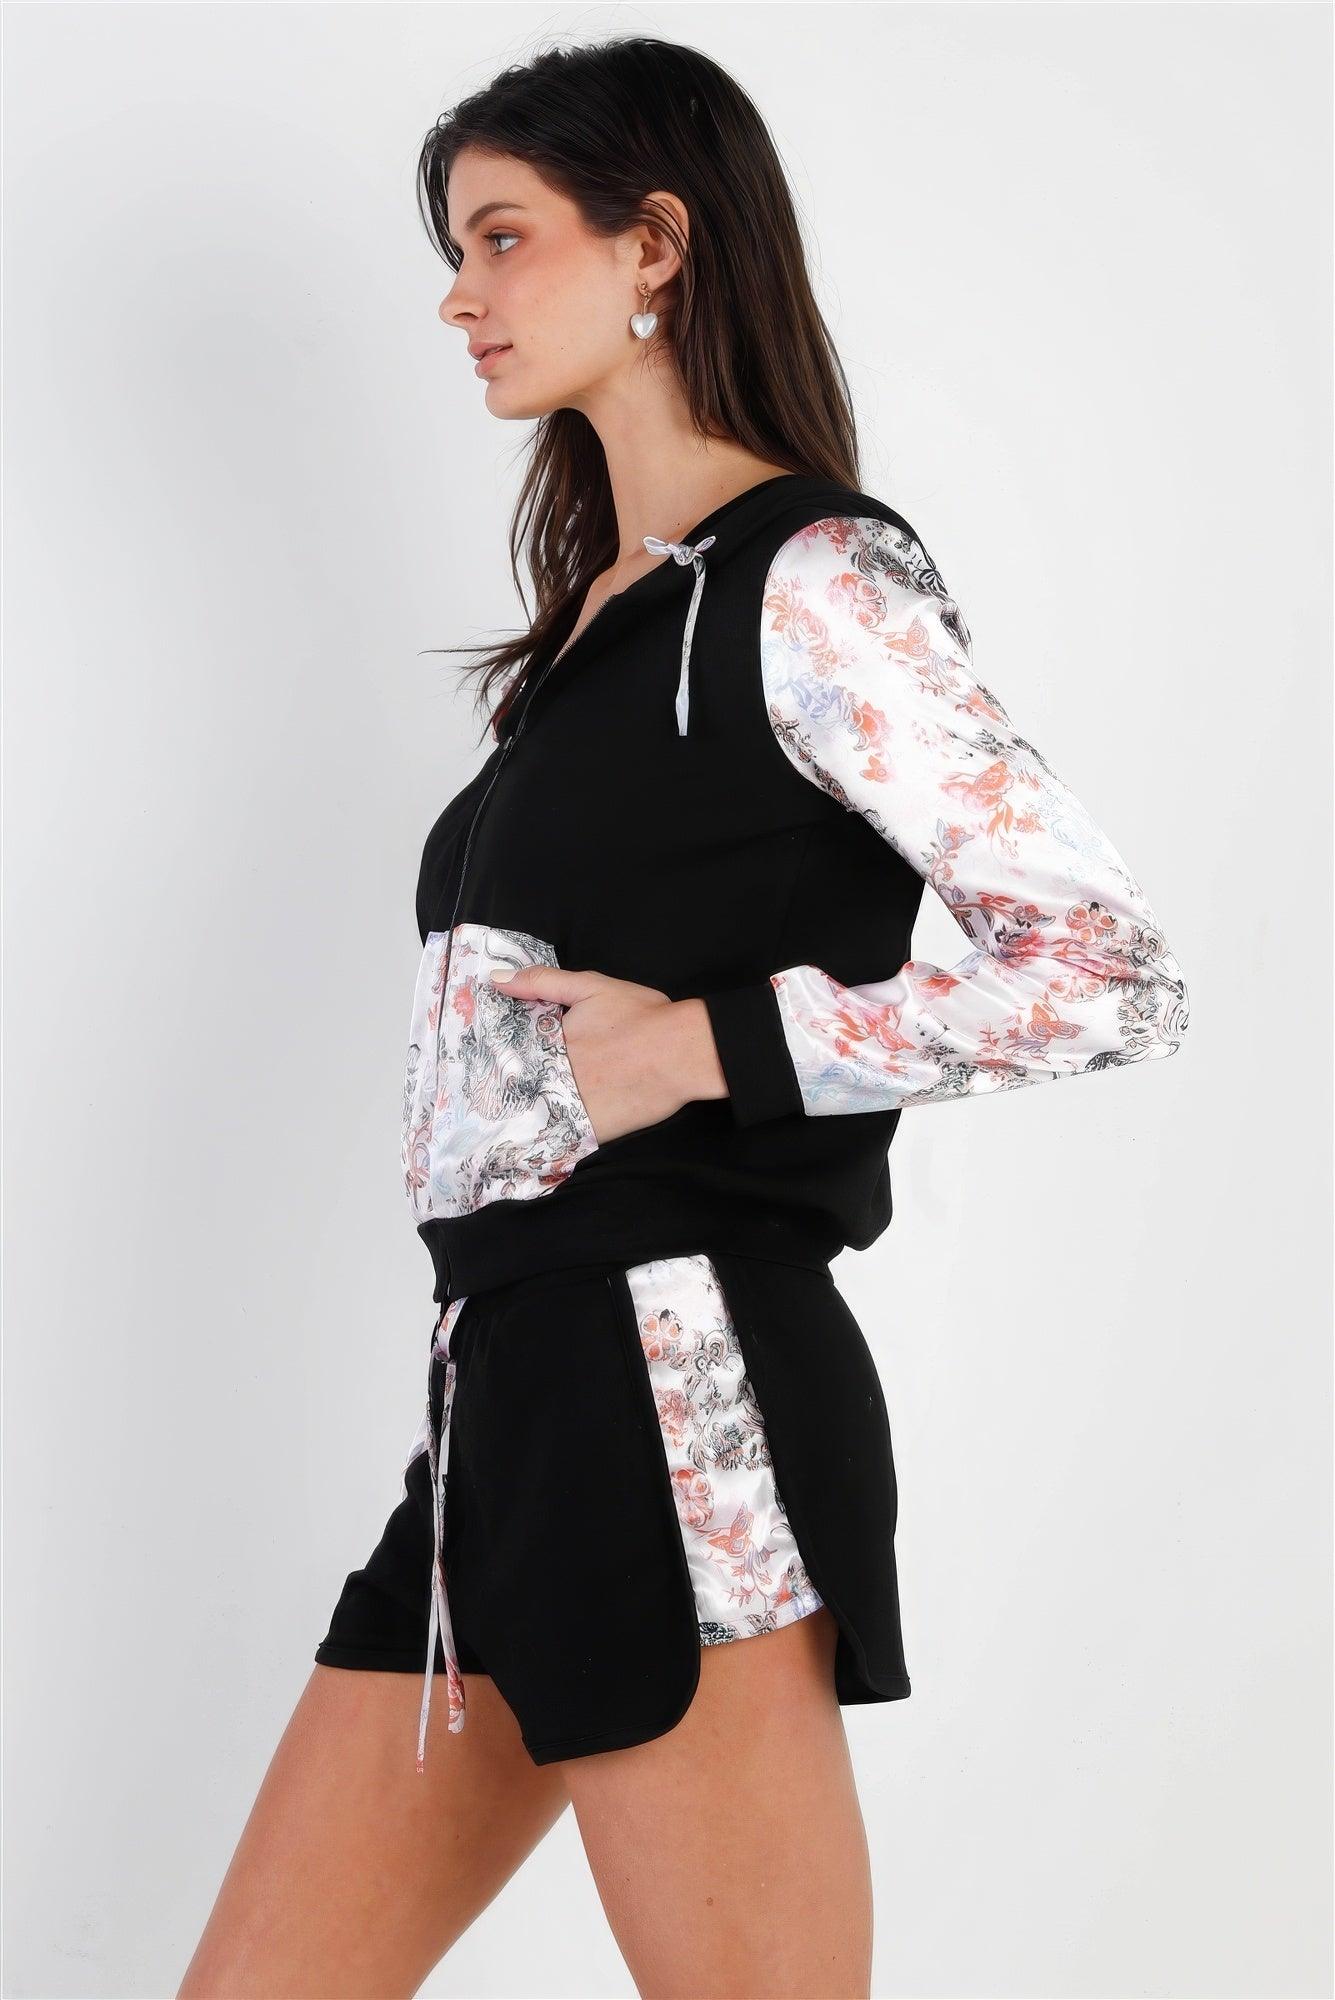 Black & Multi Color Print Colorblock Zip-up Hooded Top & Short Set - AMIClubwear